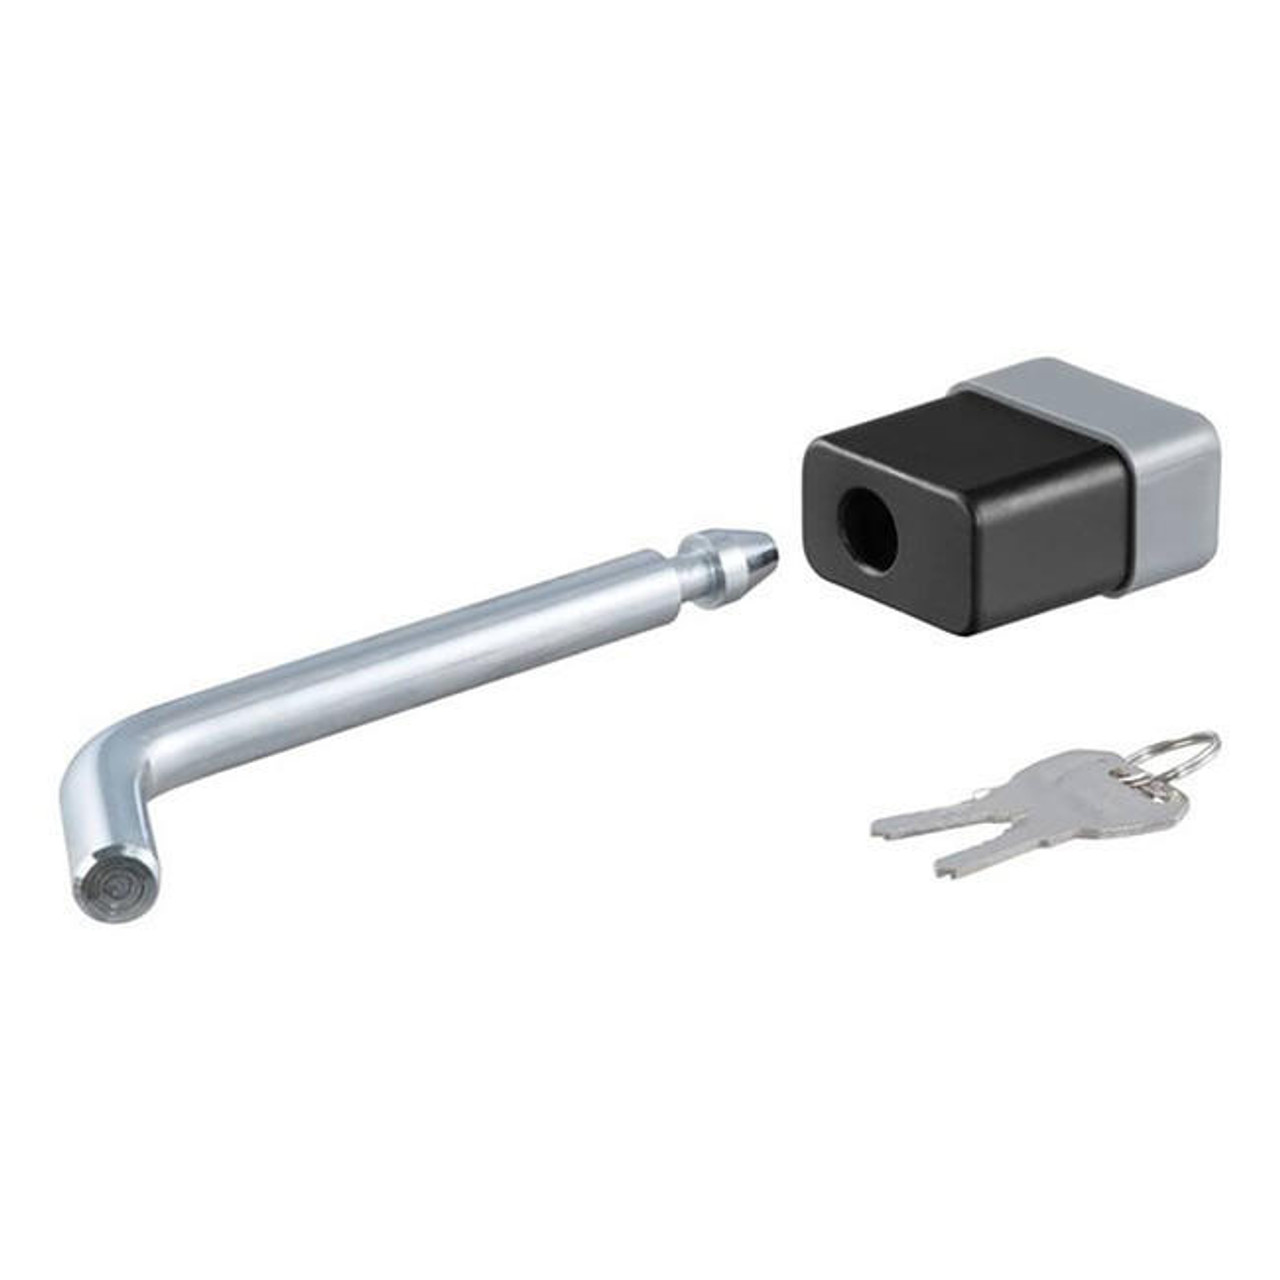 5/16 Pin Diam, 3 Long, Zinc Plated Steel Ball Lock Hitch Pin